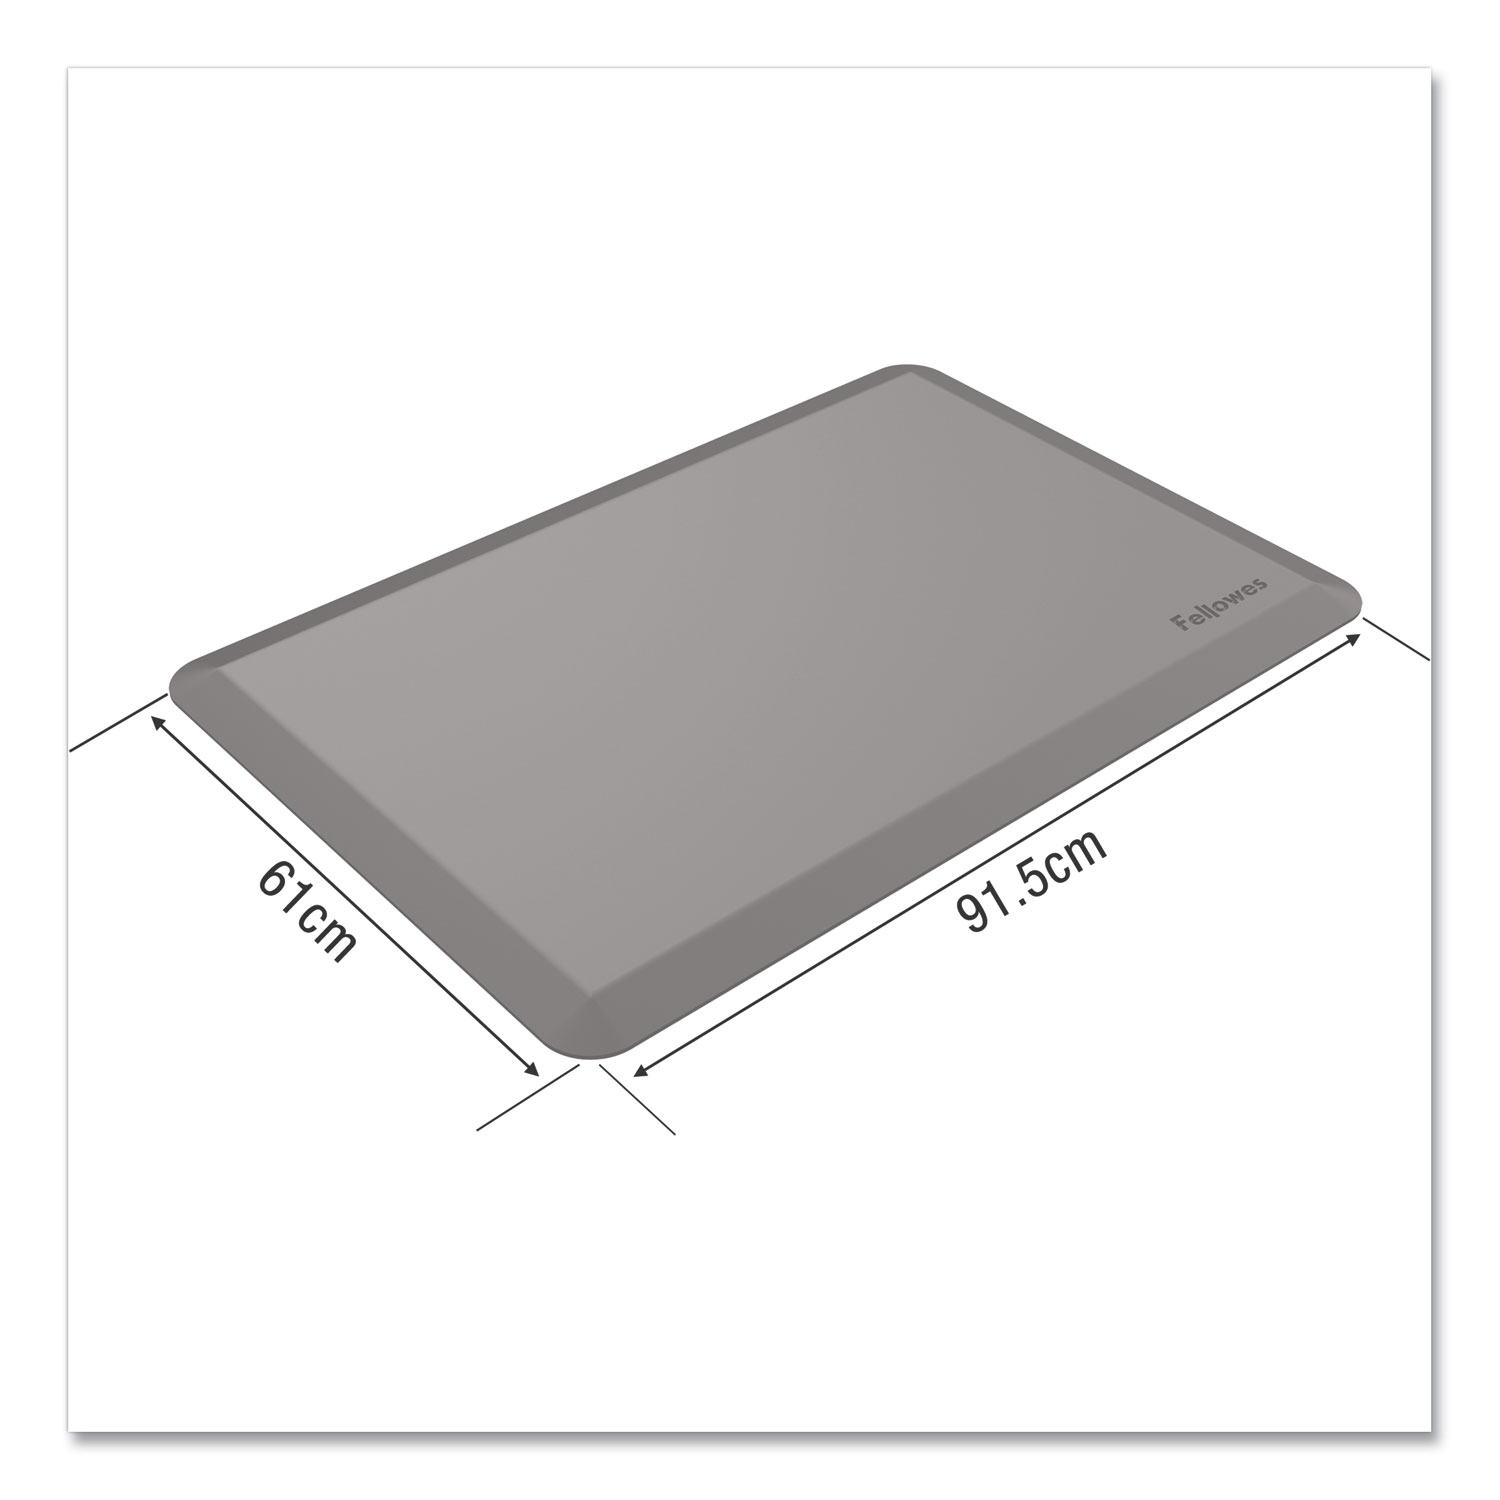 Serve Secure Rectangle Black Rubber Floor Mat - Beveled Edge - 36 x 24 x  1/2 - 1 count box